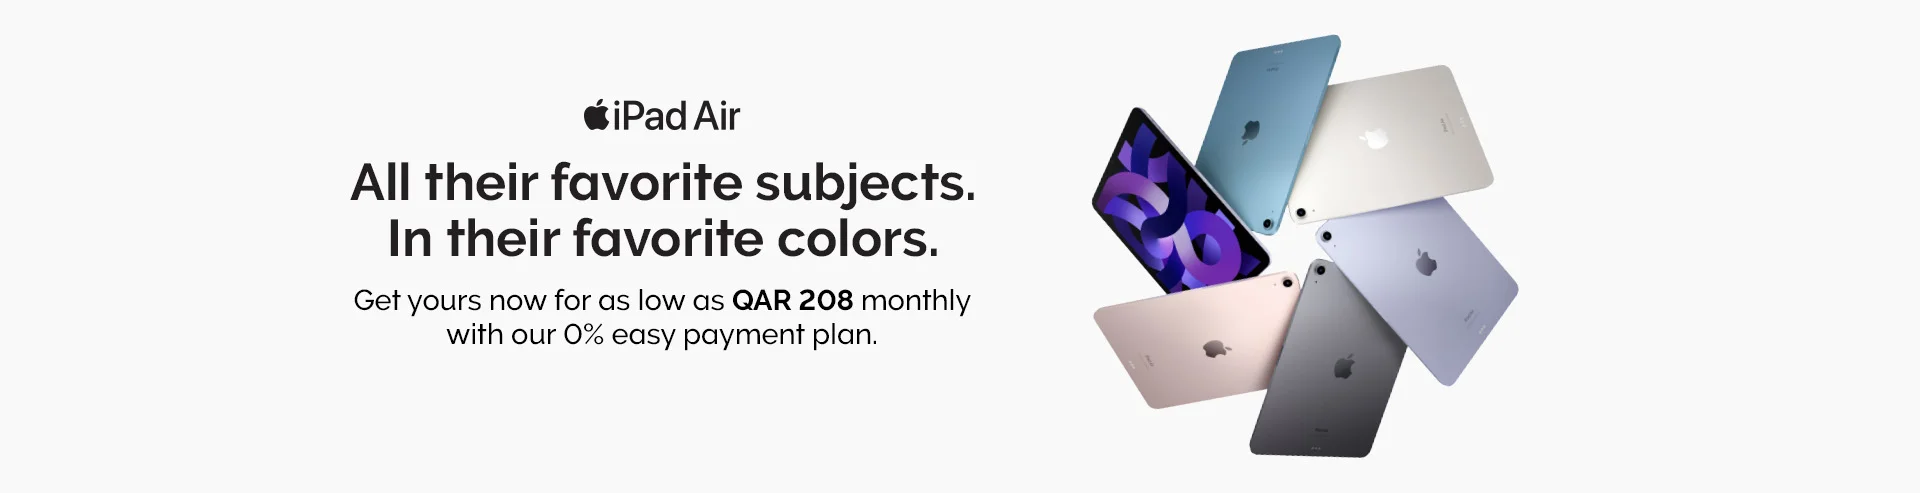 Full-Width-Large-iPad-Air-EPP-Q4-22-Qatar-Desktop.webp